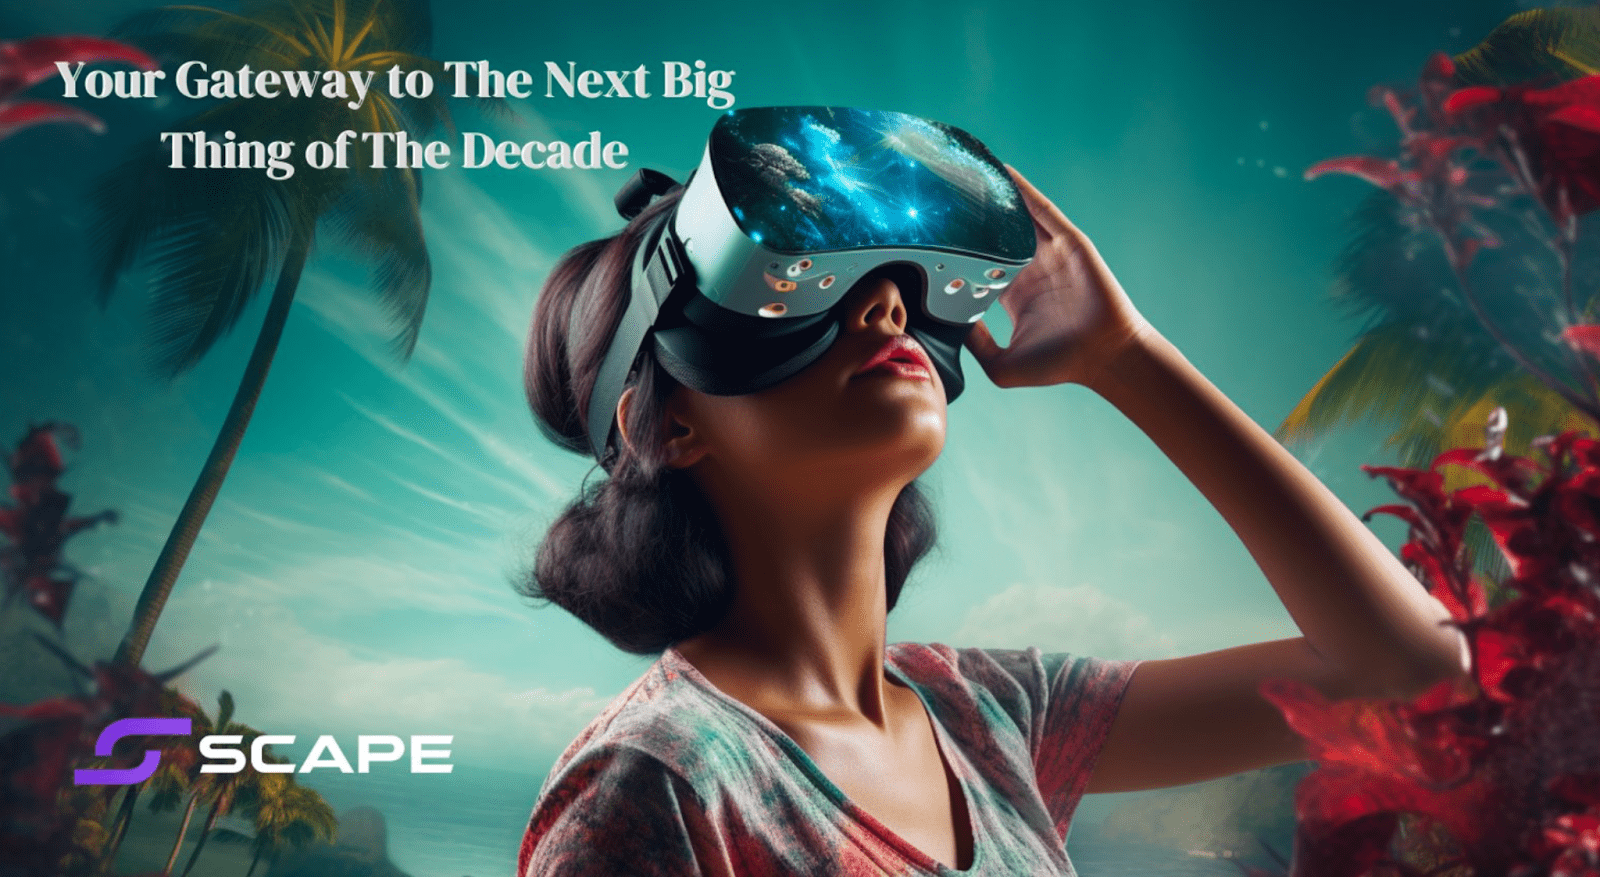 5th Scape: 一个虚拟现实项目　技术与想象融合　共同创造未来